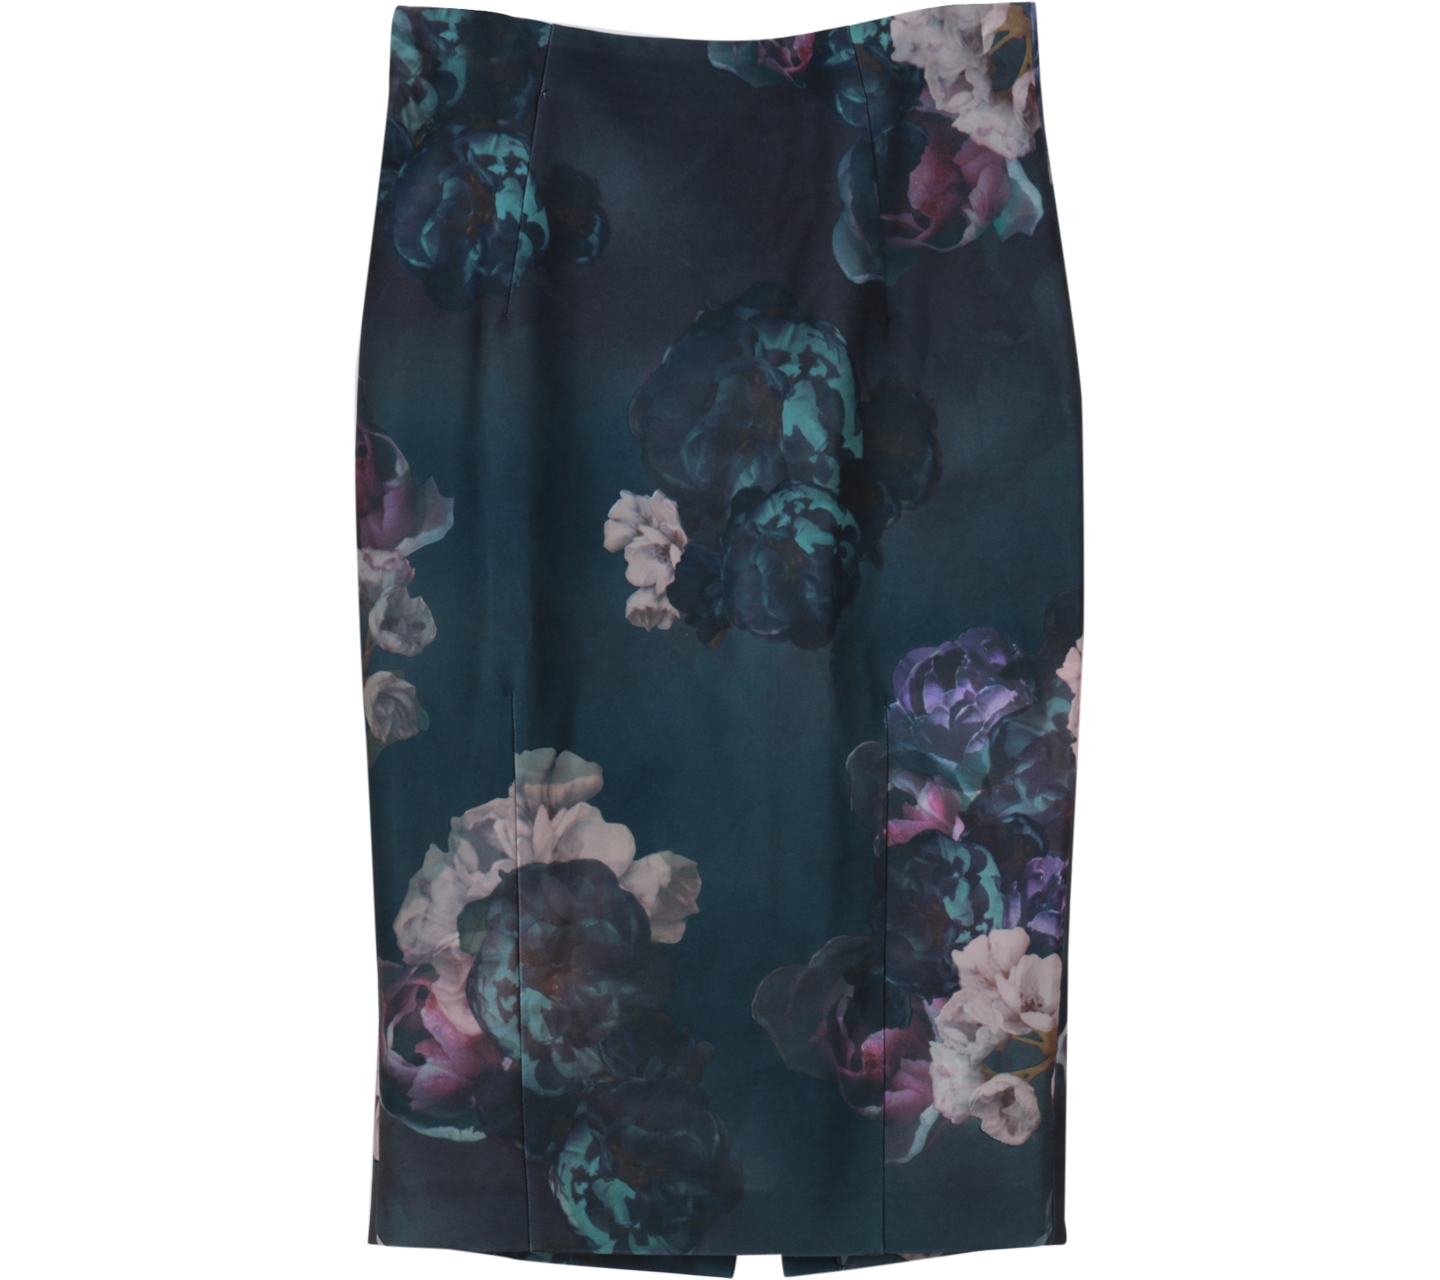 Balmain X H&M Green Floral Skirt